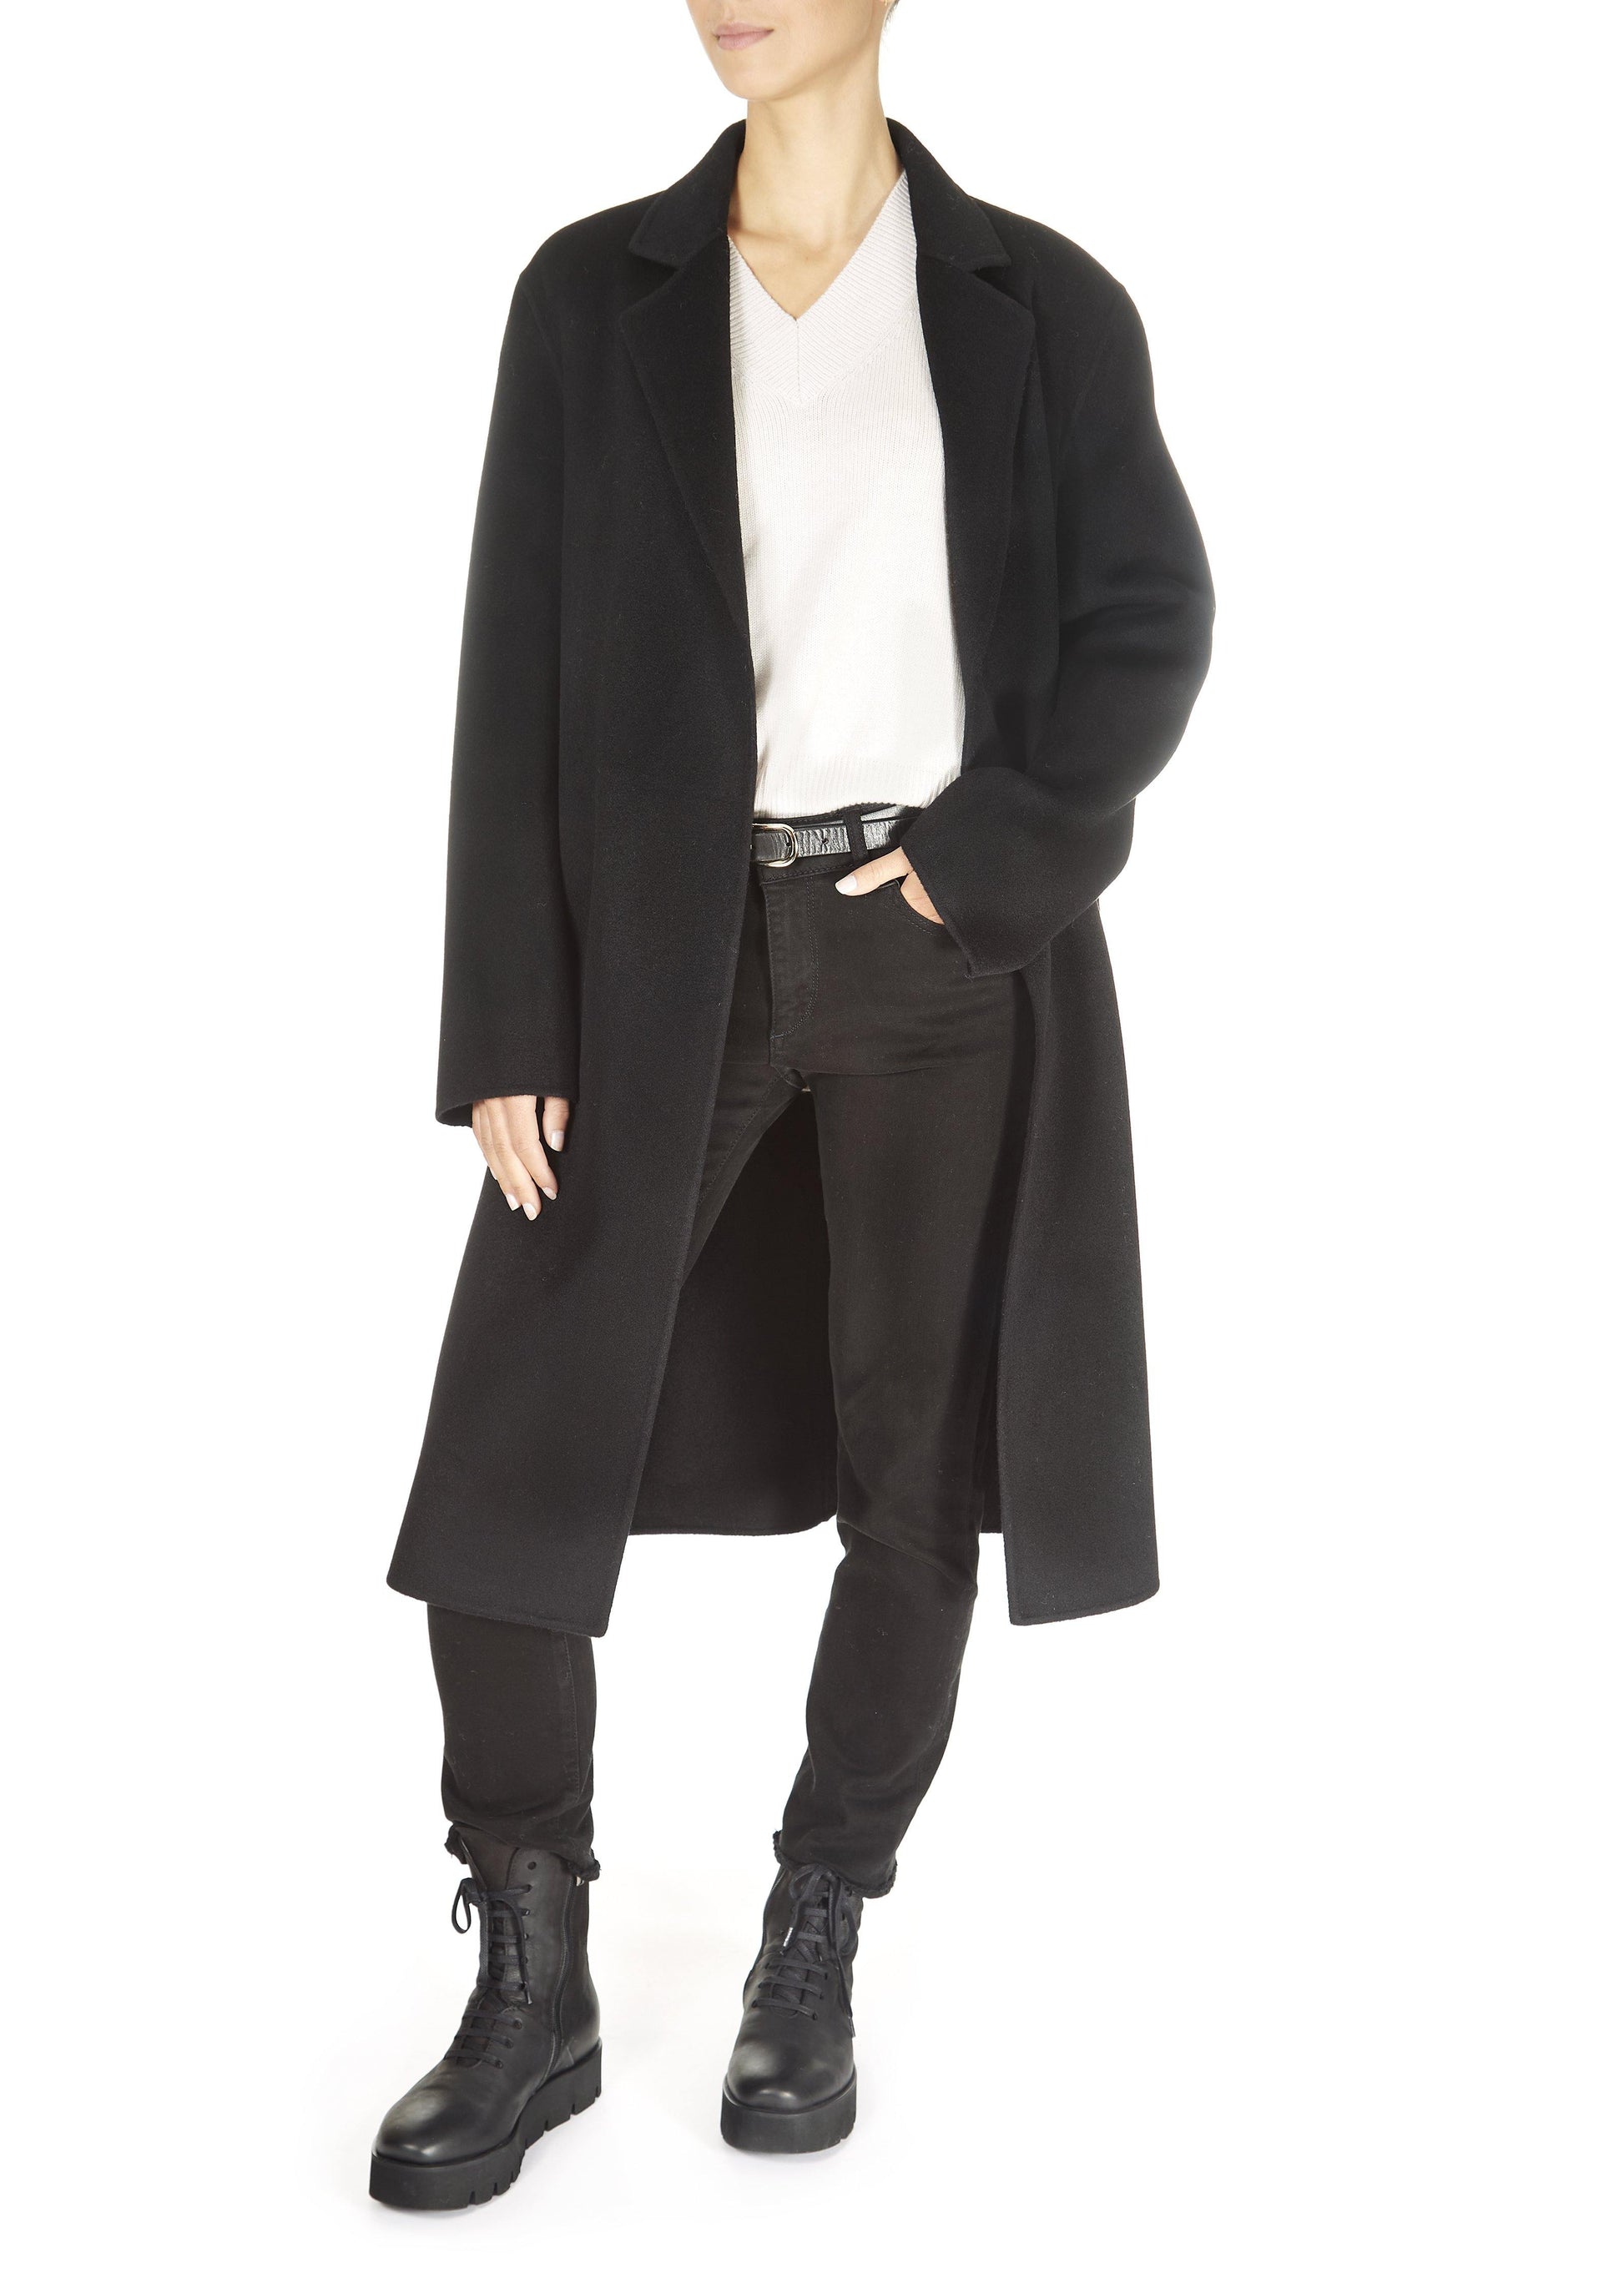 'Maguie' Black Wool Belted Coat - Jessimara